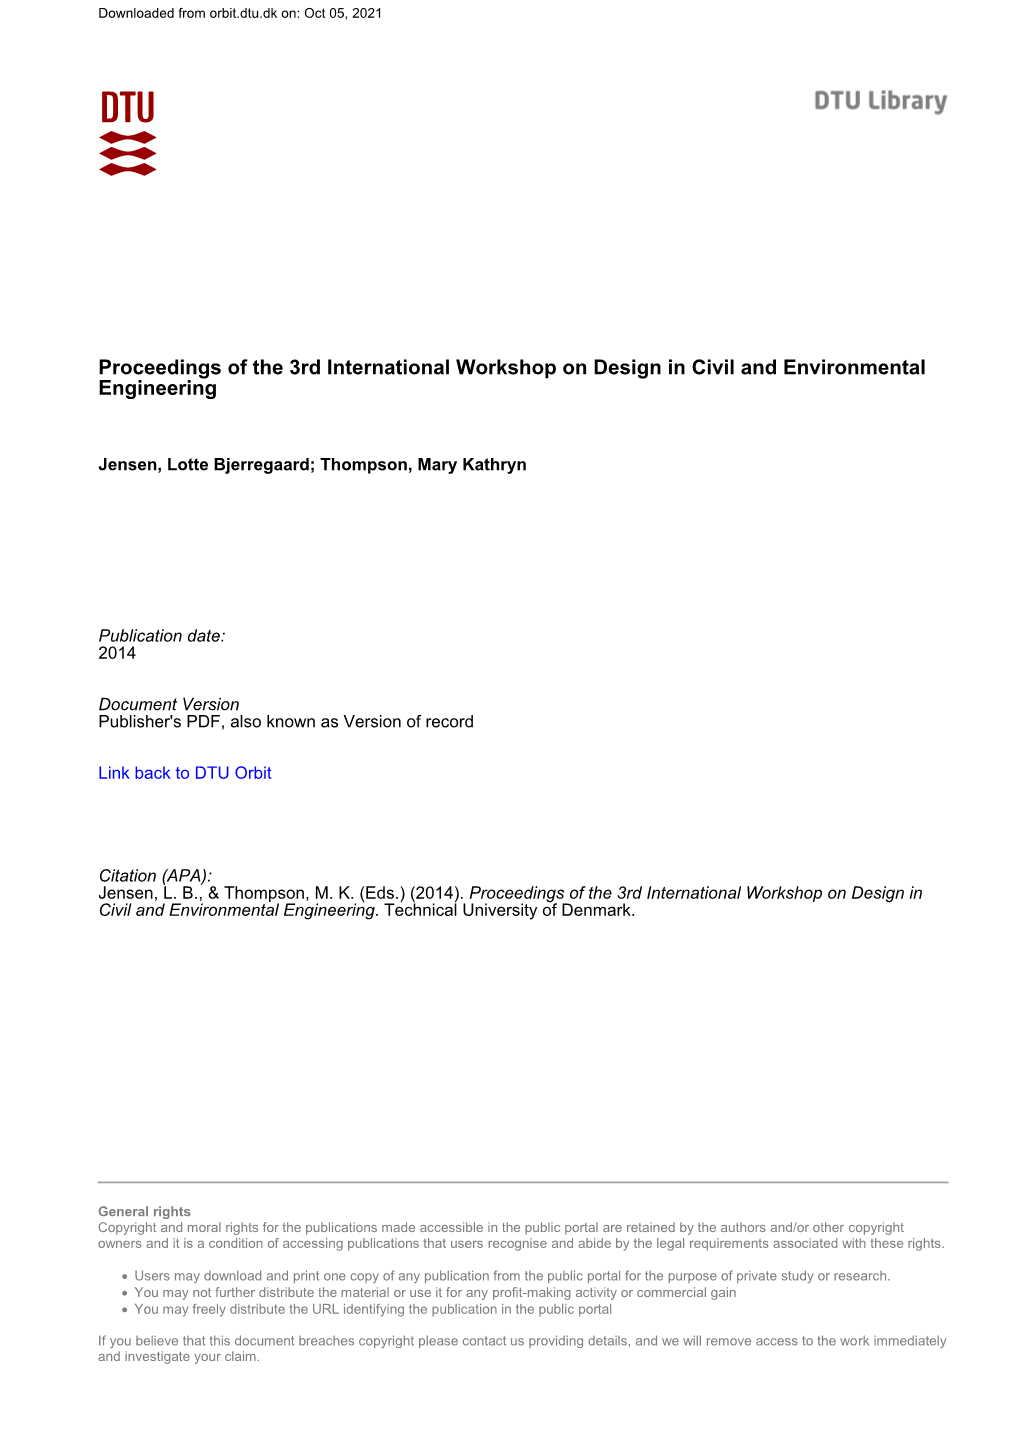 Proceedings of the 3Rd International Workshop on Design in Civil and Environmental Engineering